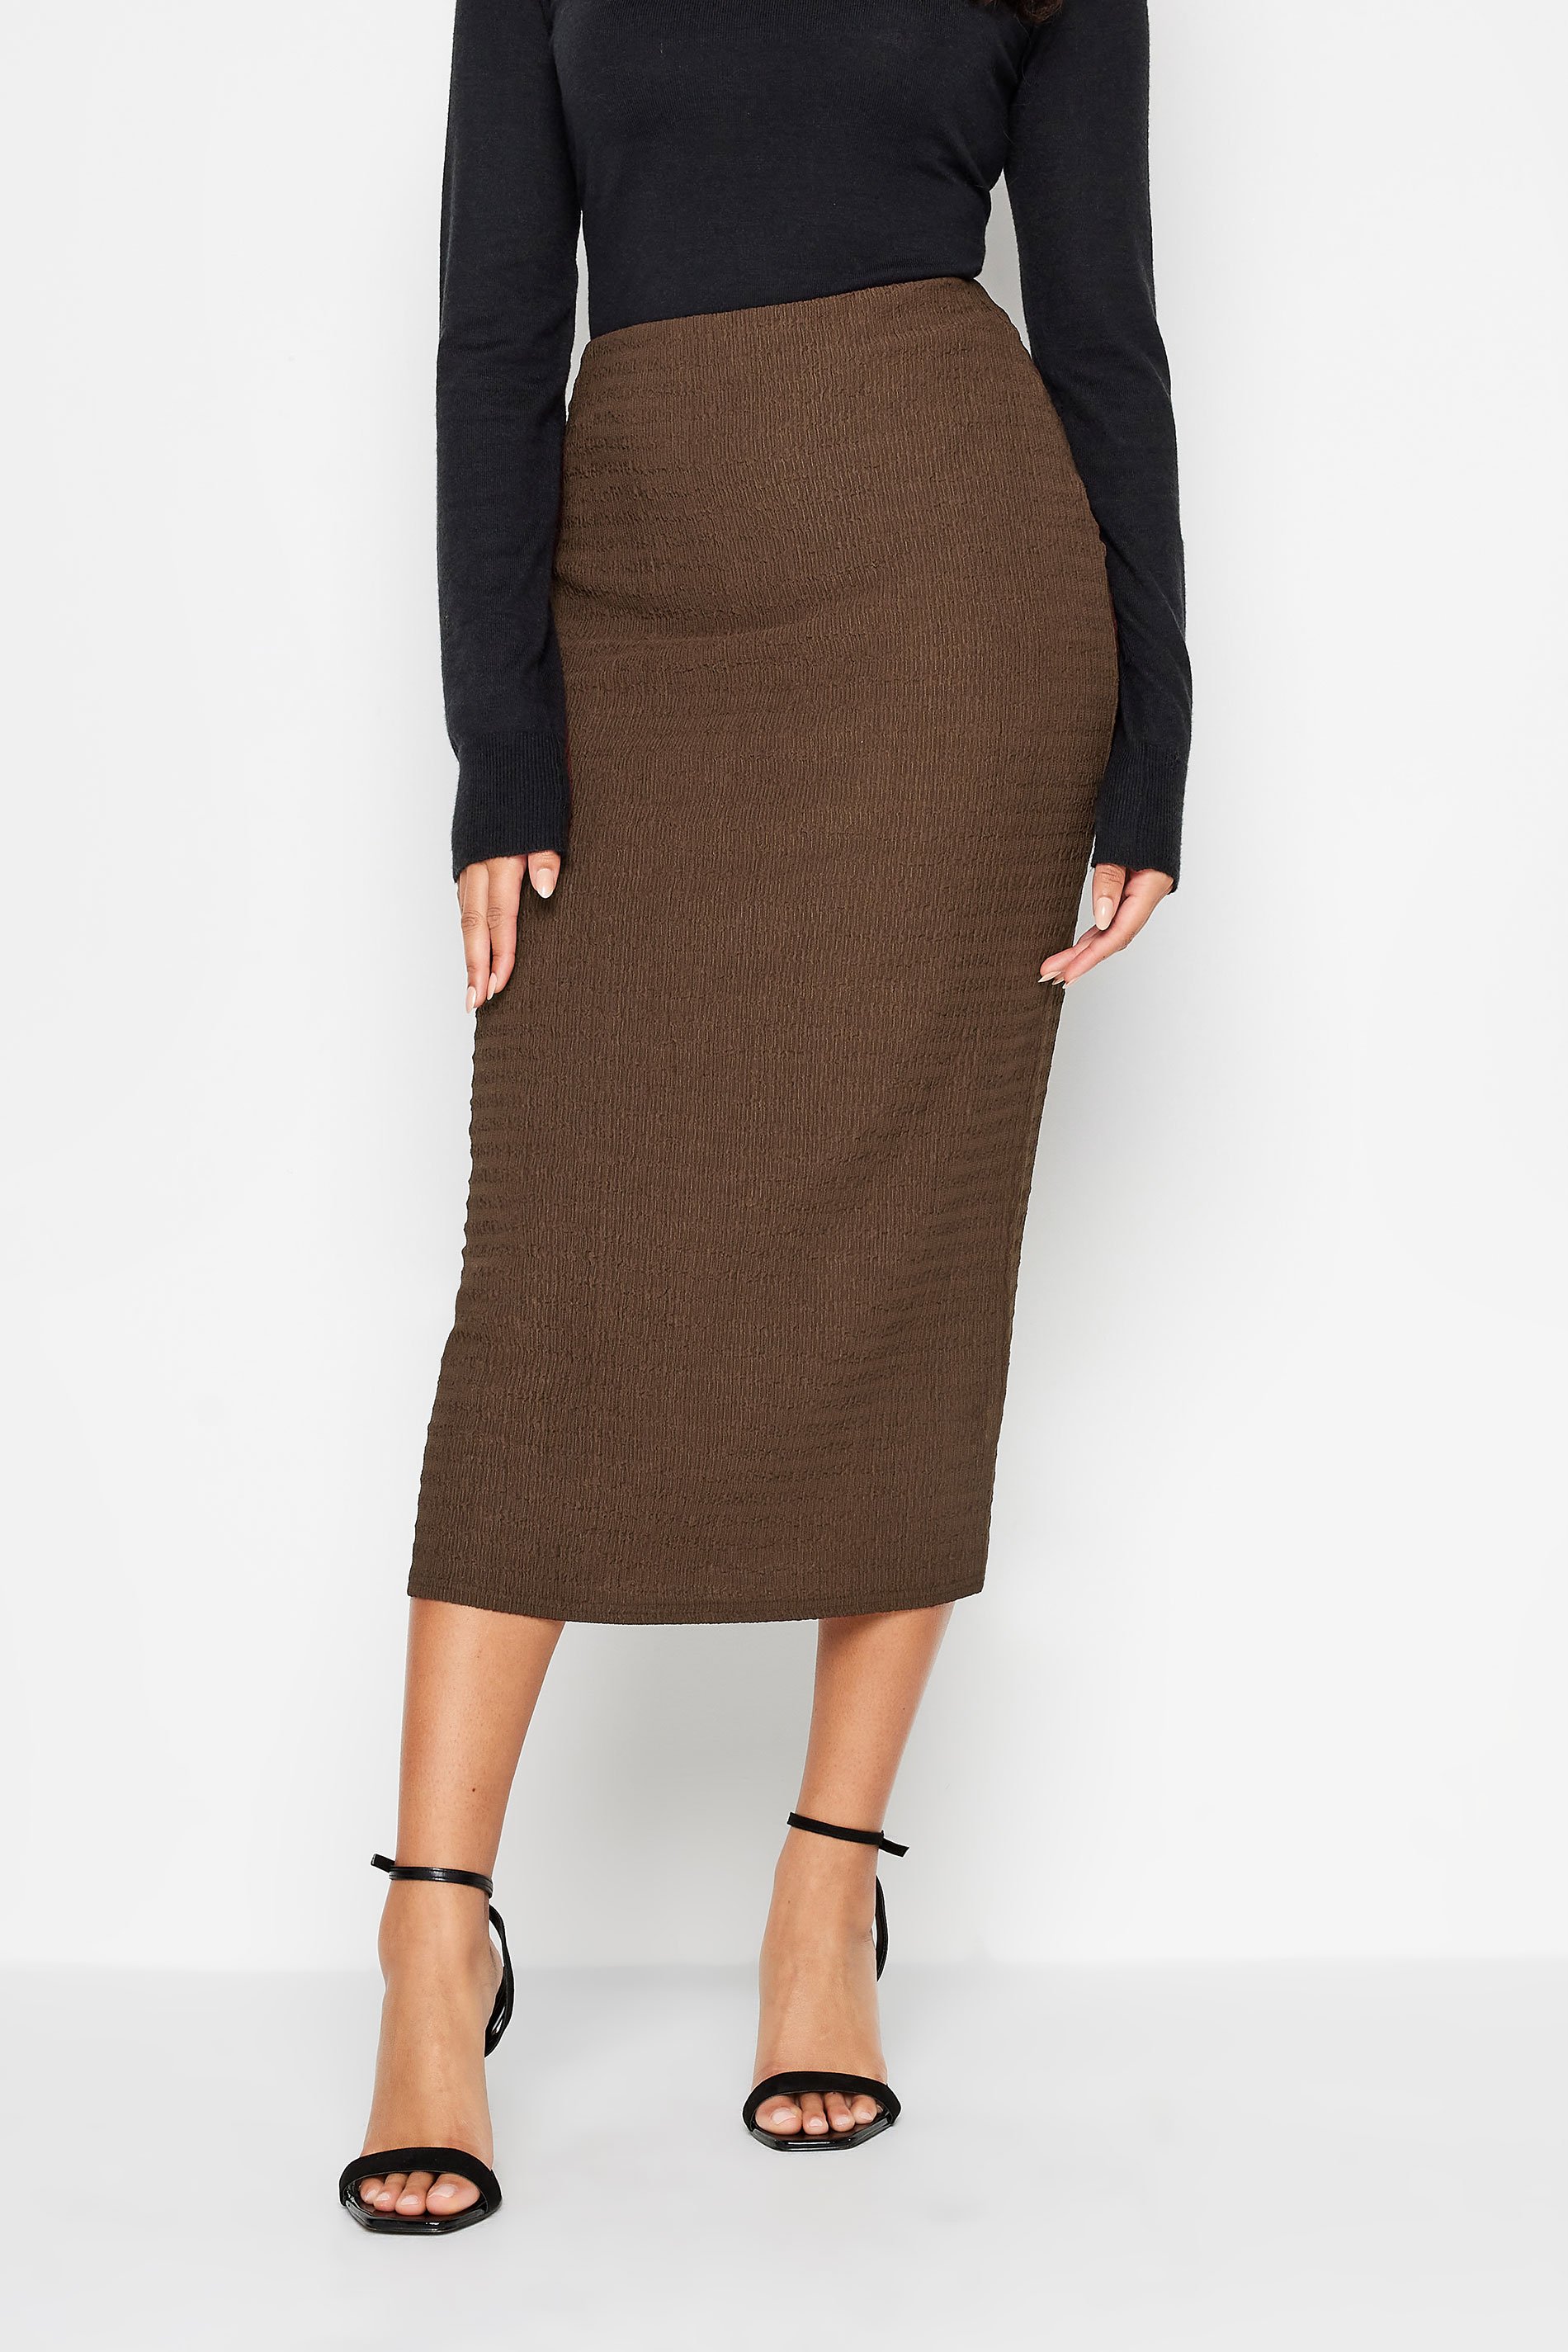 M&Co Brown Textured Midi Tube Skirt | M&Co 1